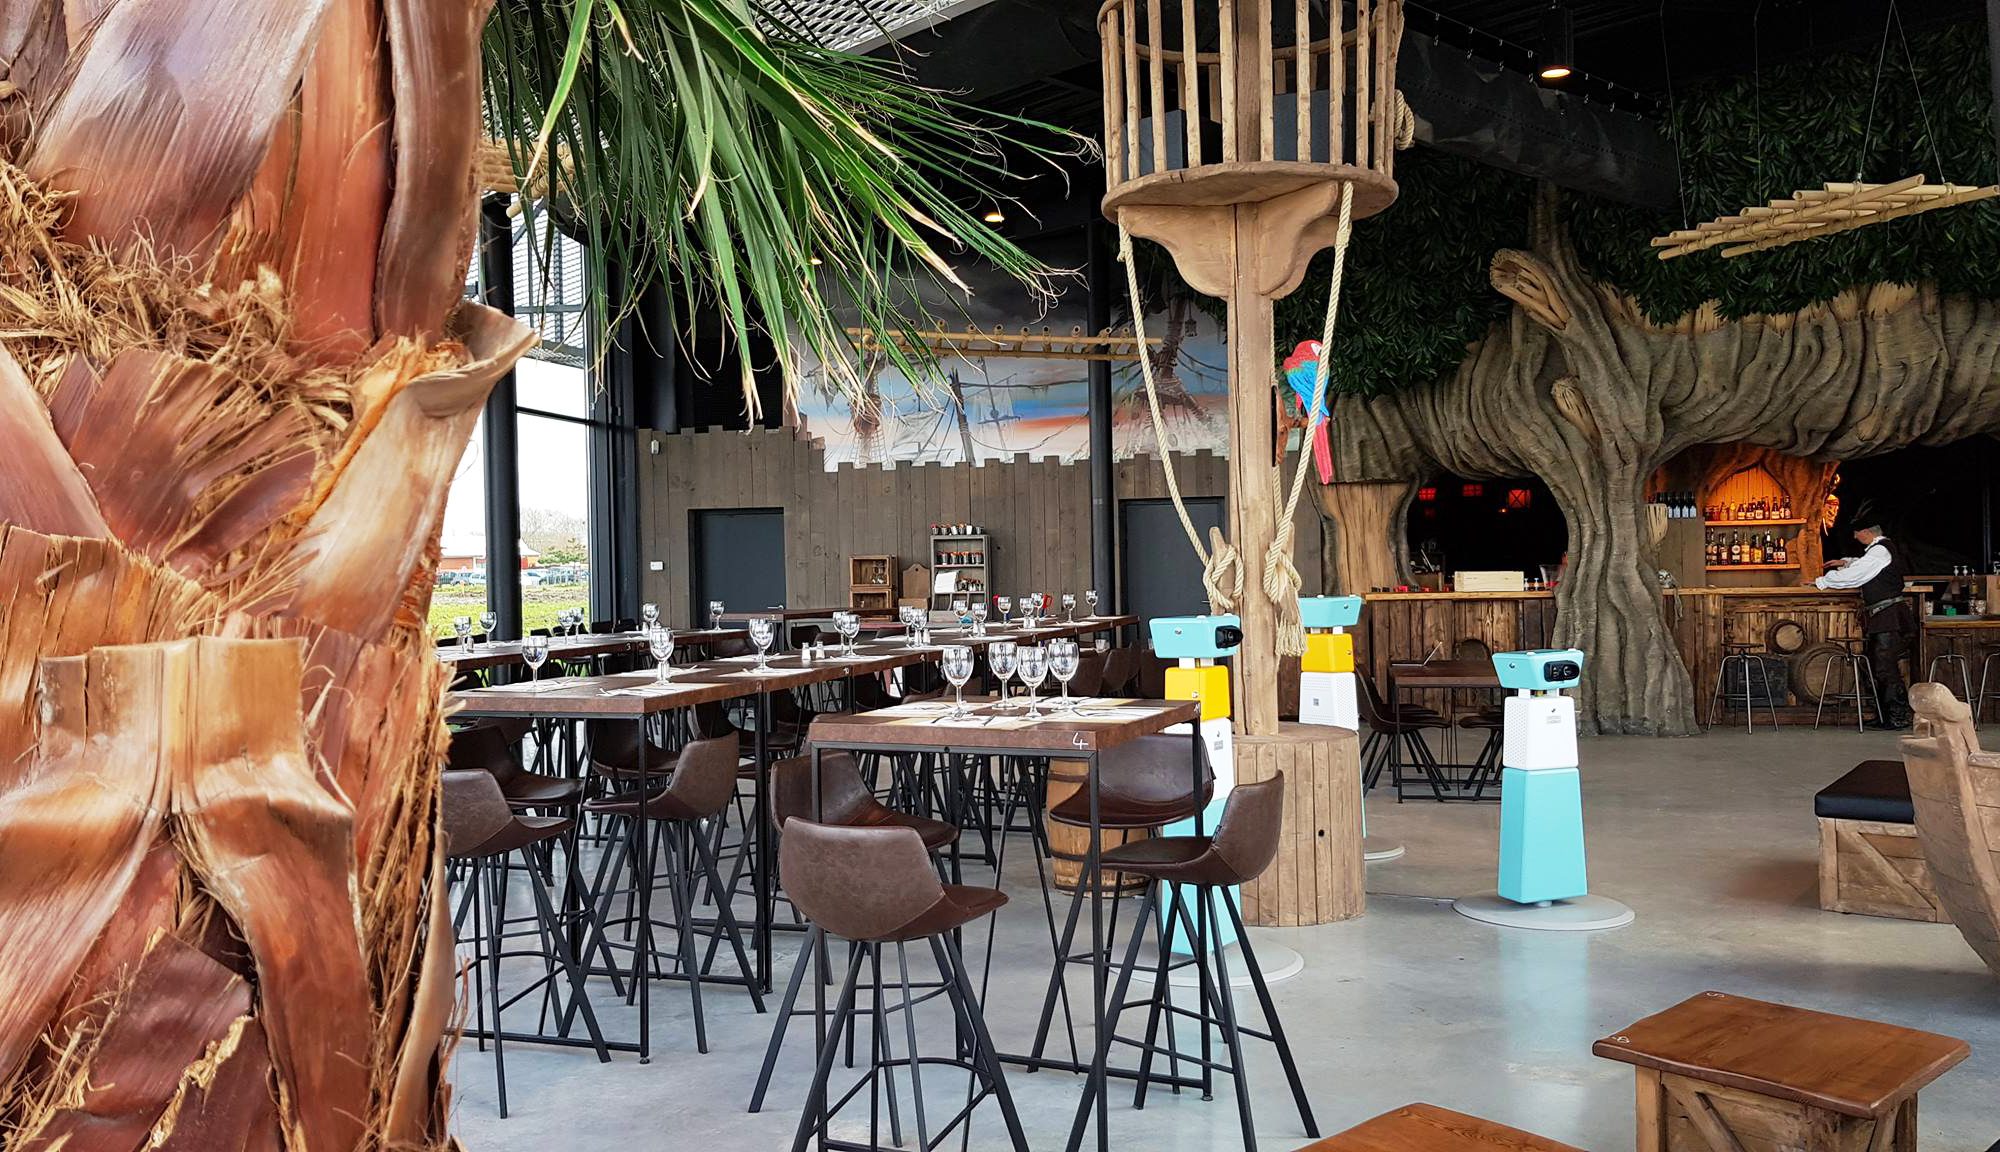 Pirates Paradise has chosen Kylii View fo its restaurants